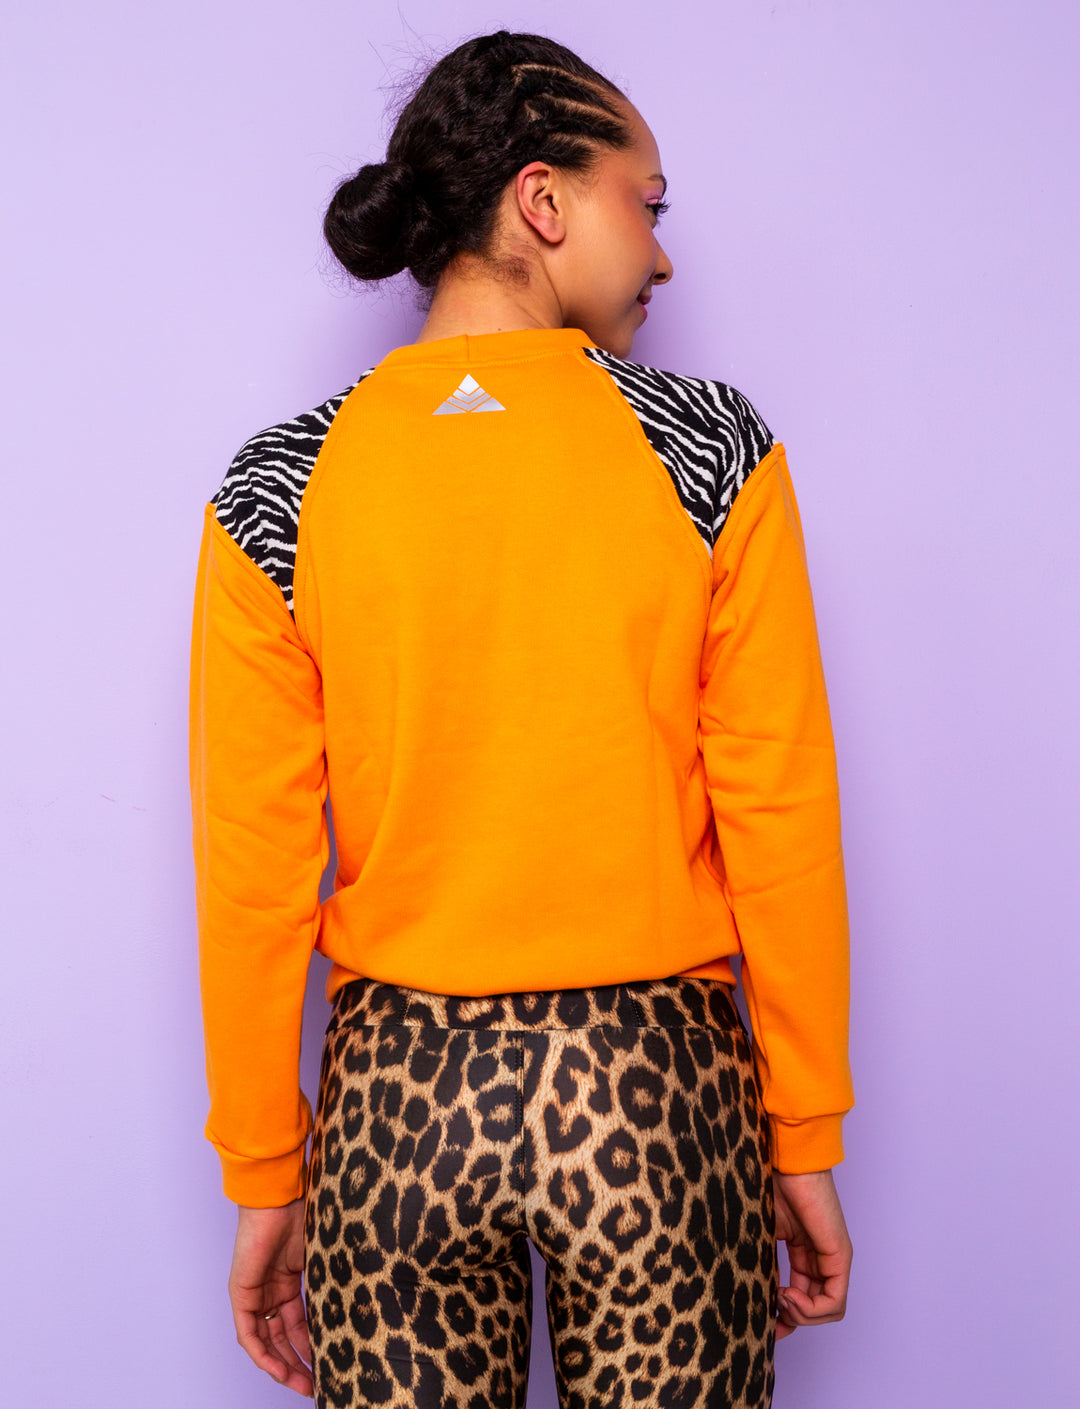 back of woman wearing orange sweatshirt with zebra print shoulders